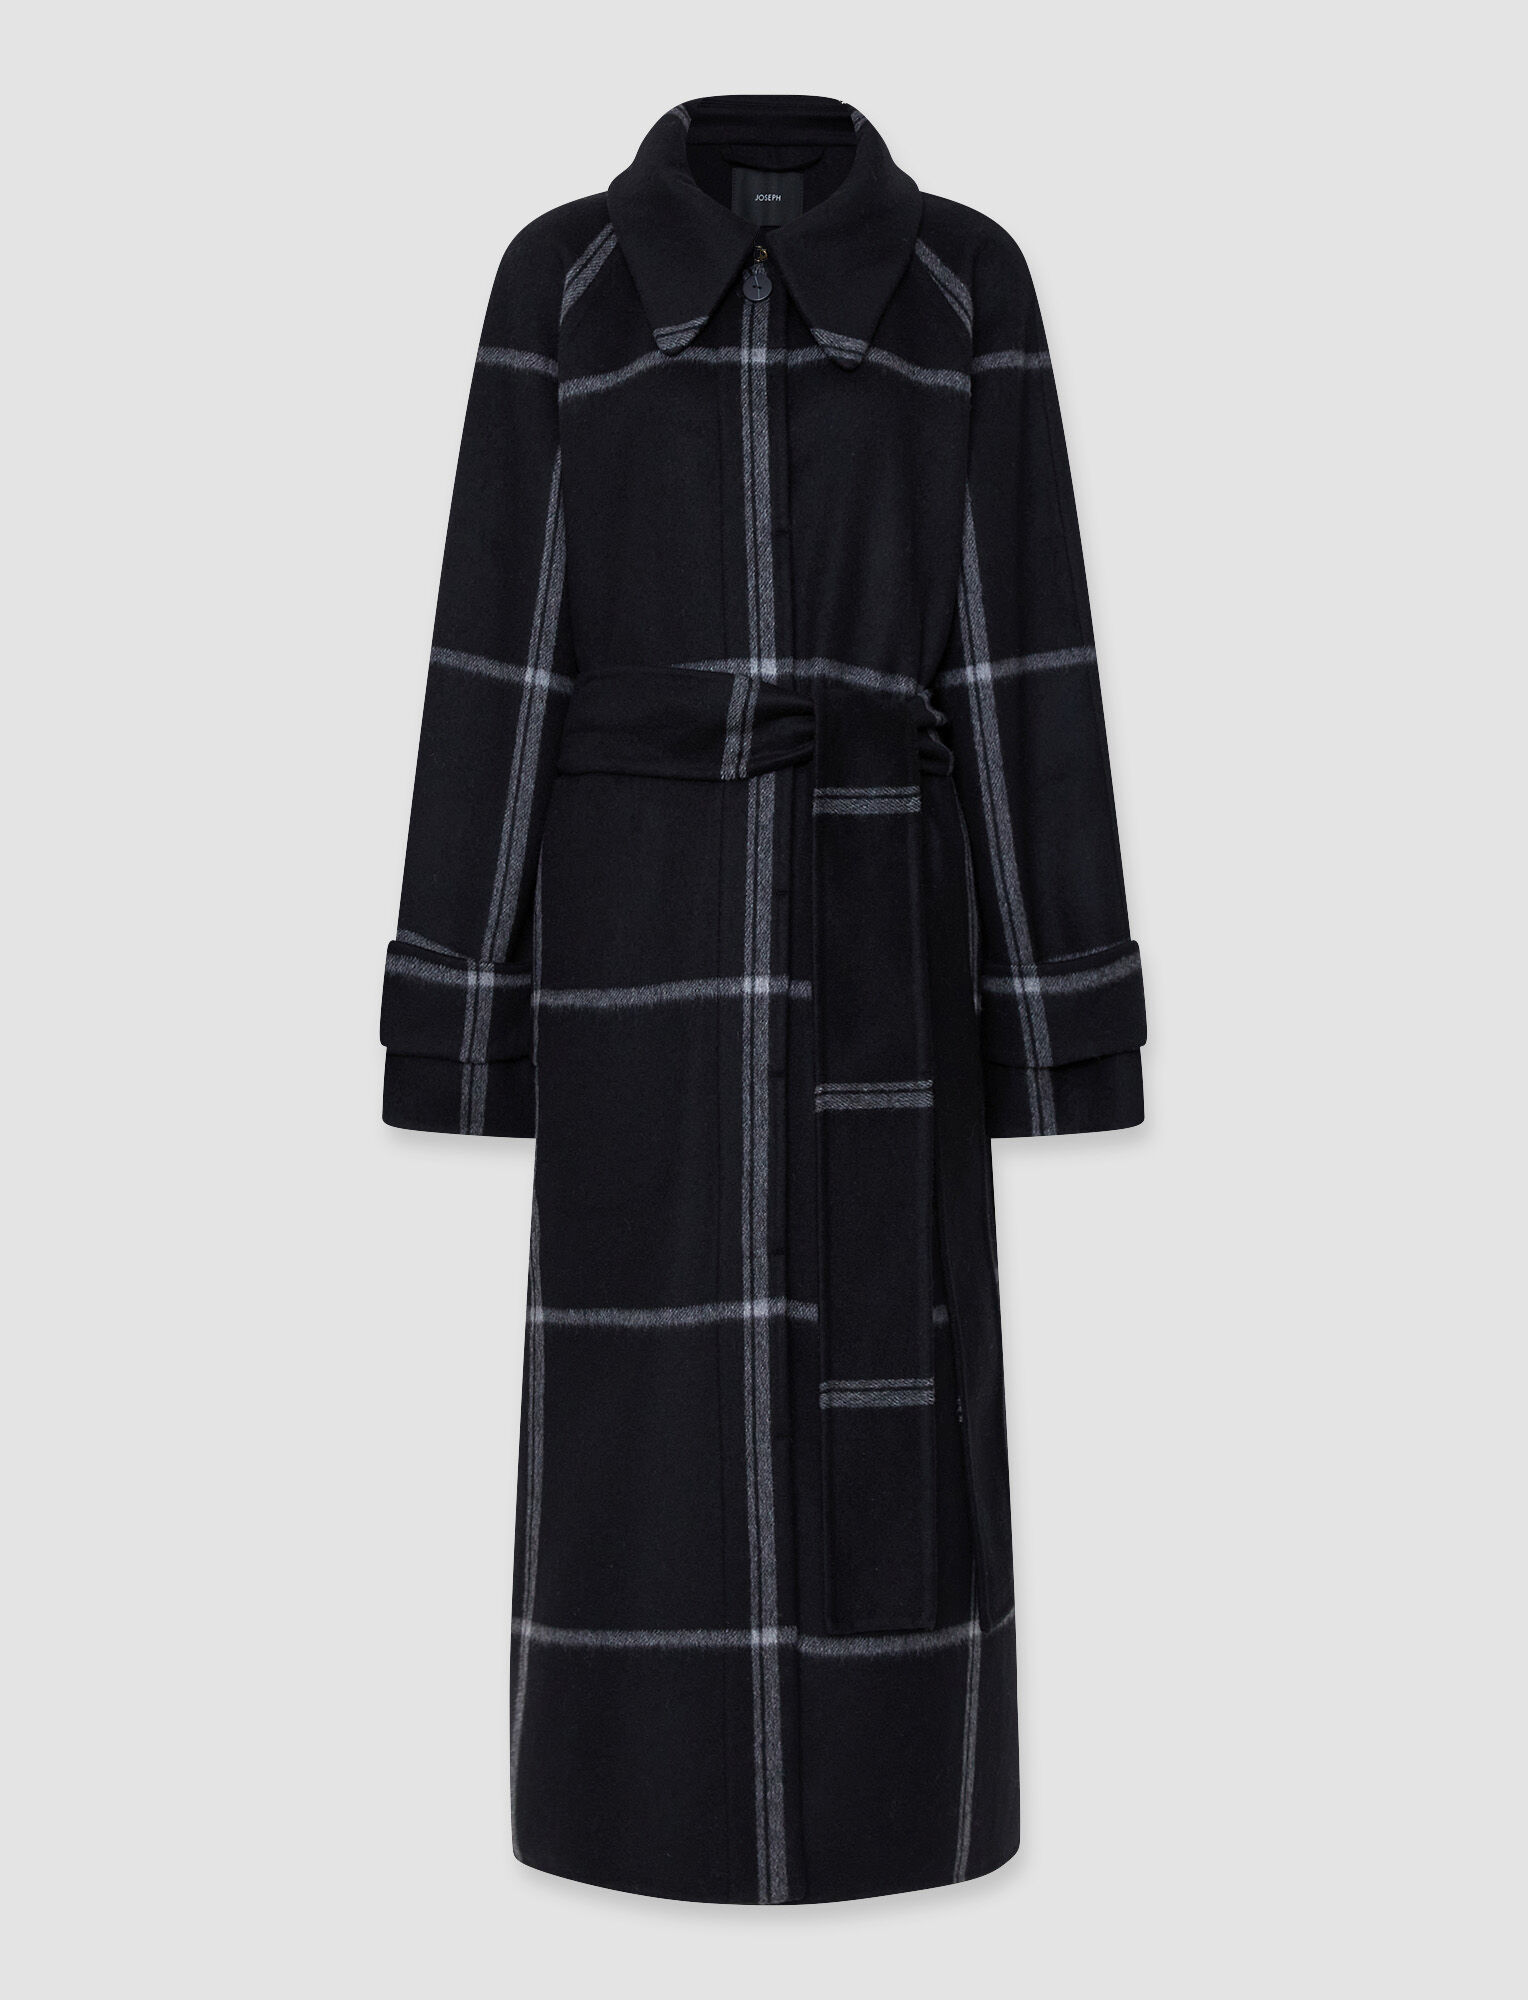 Joseph, Plaid Wool Rodsley Coat, in Black/Mid Grey